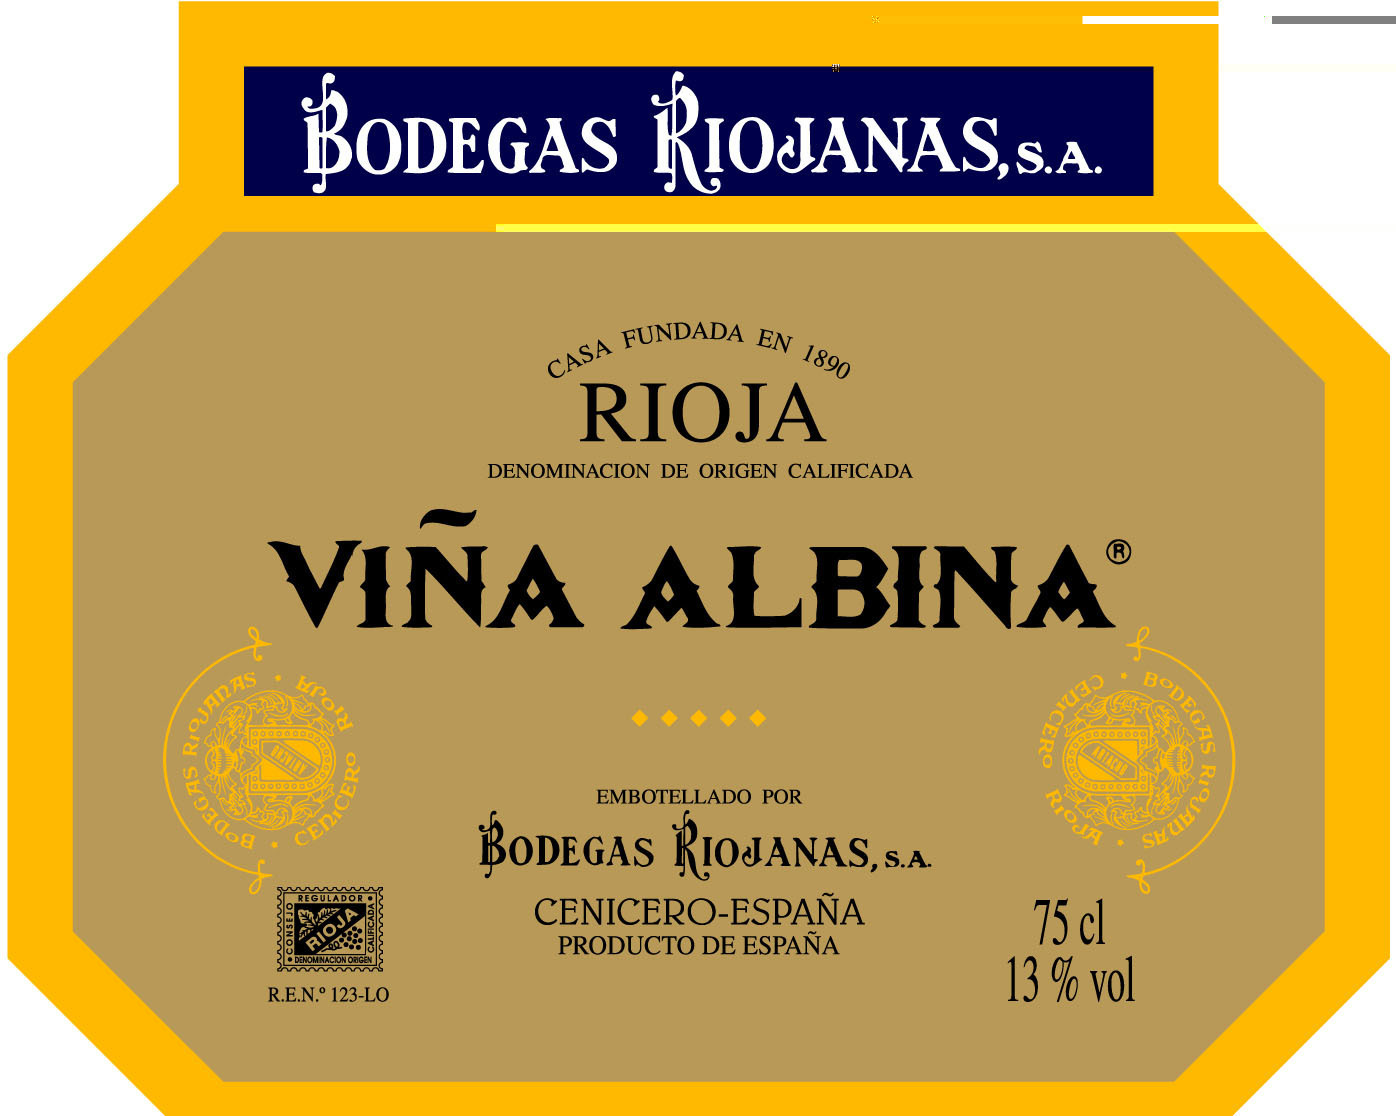 2009 Bodegas Riojanas Rioja Gran Reserva Vina Albina - click image for full description